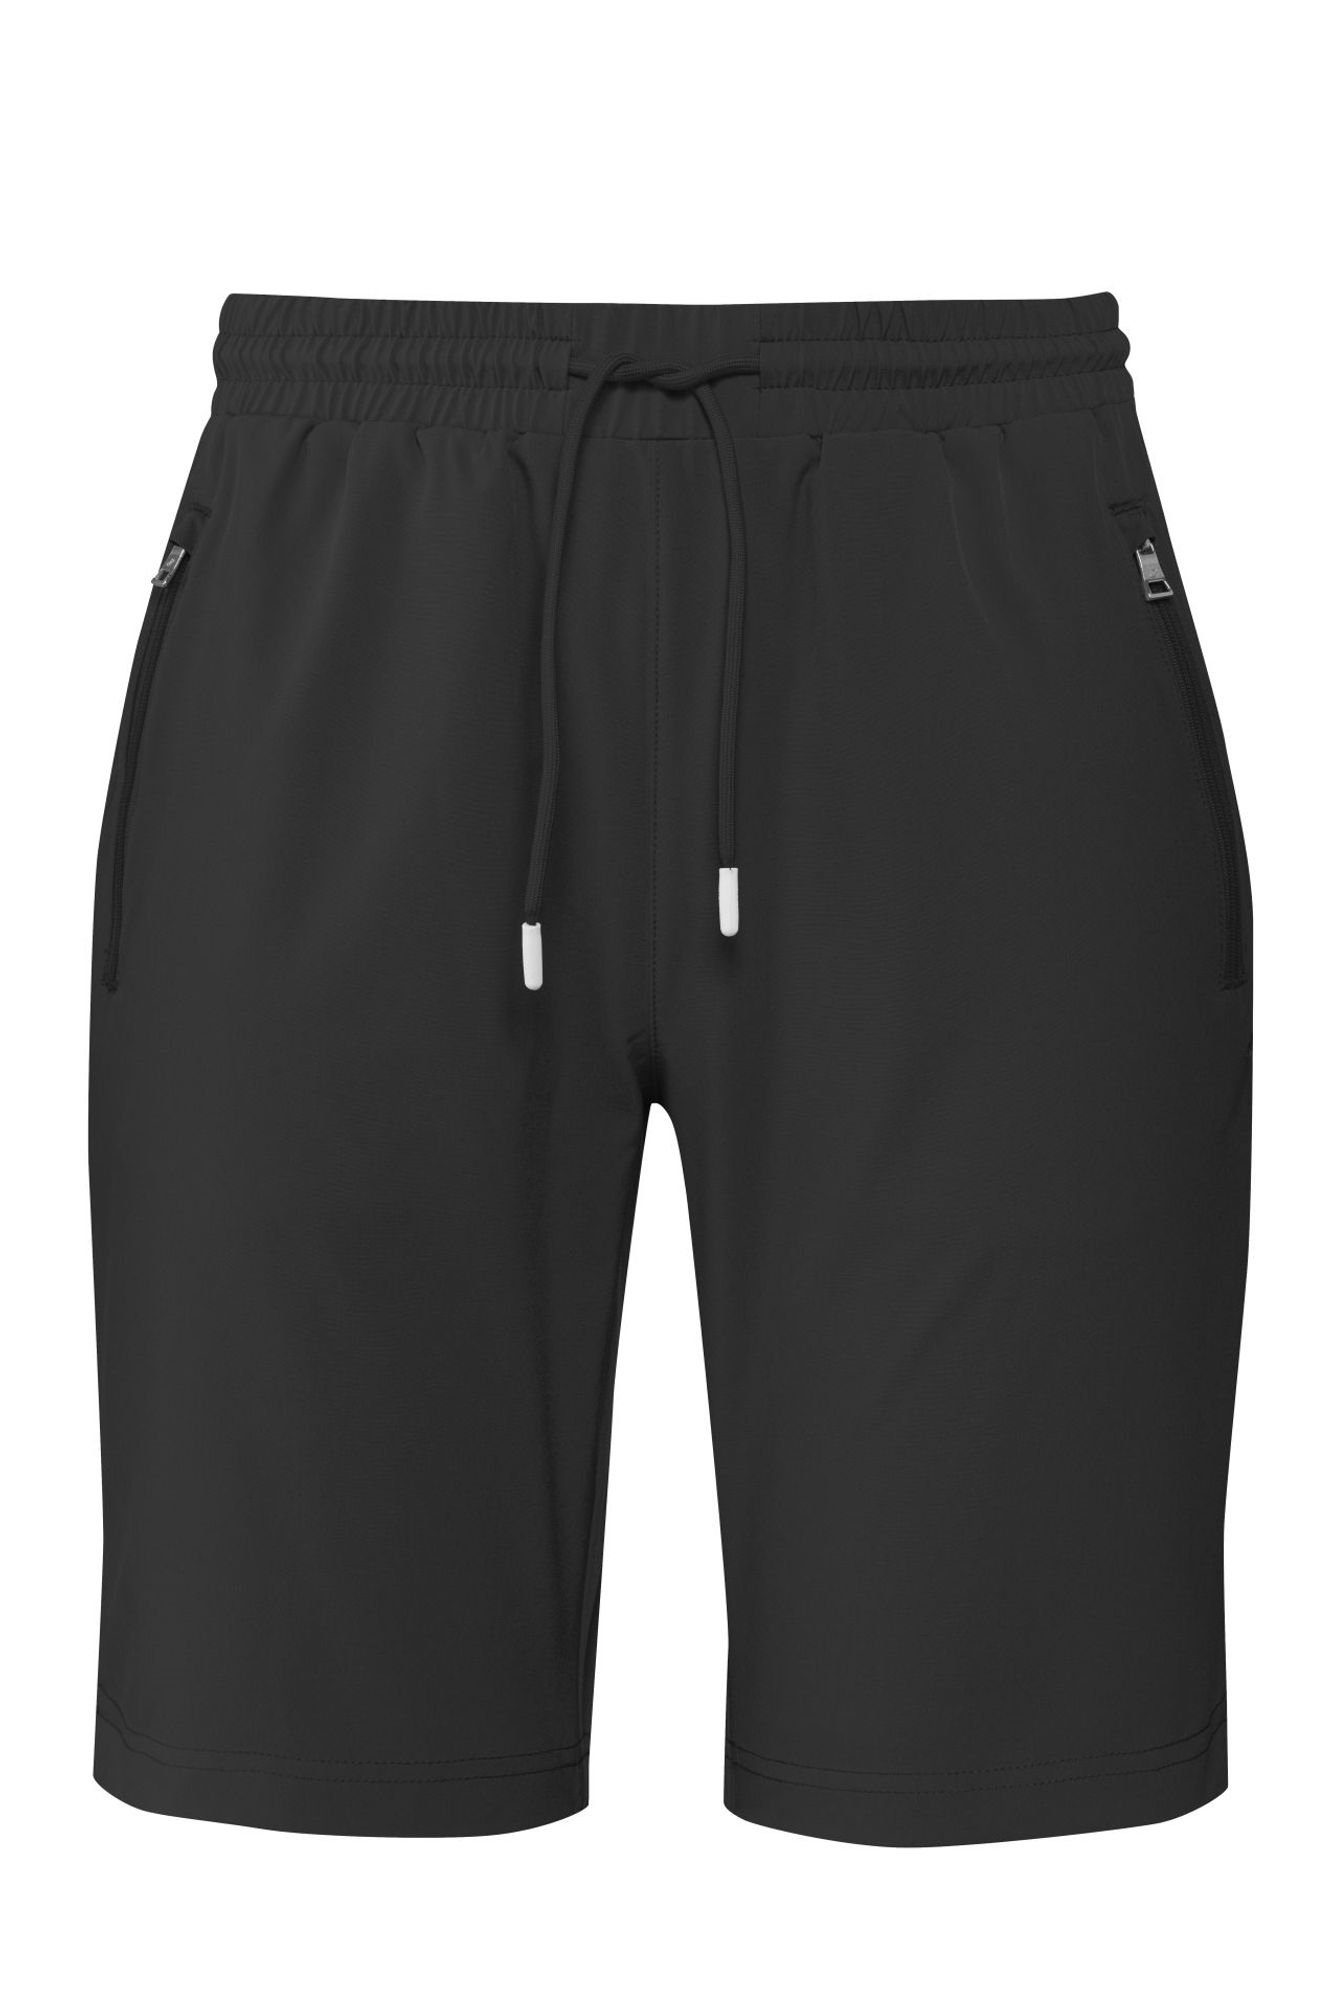 Black Shorts (00700) 36531 Sportswear Sporthose Joy